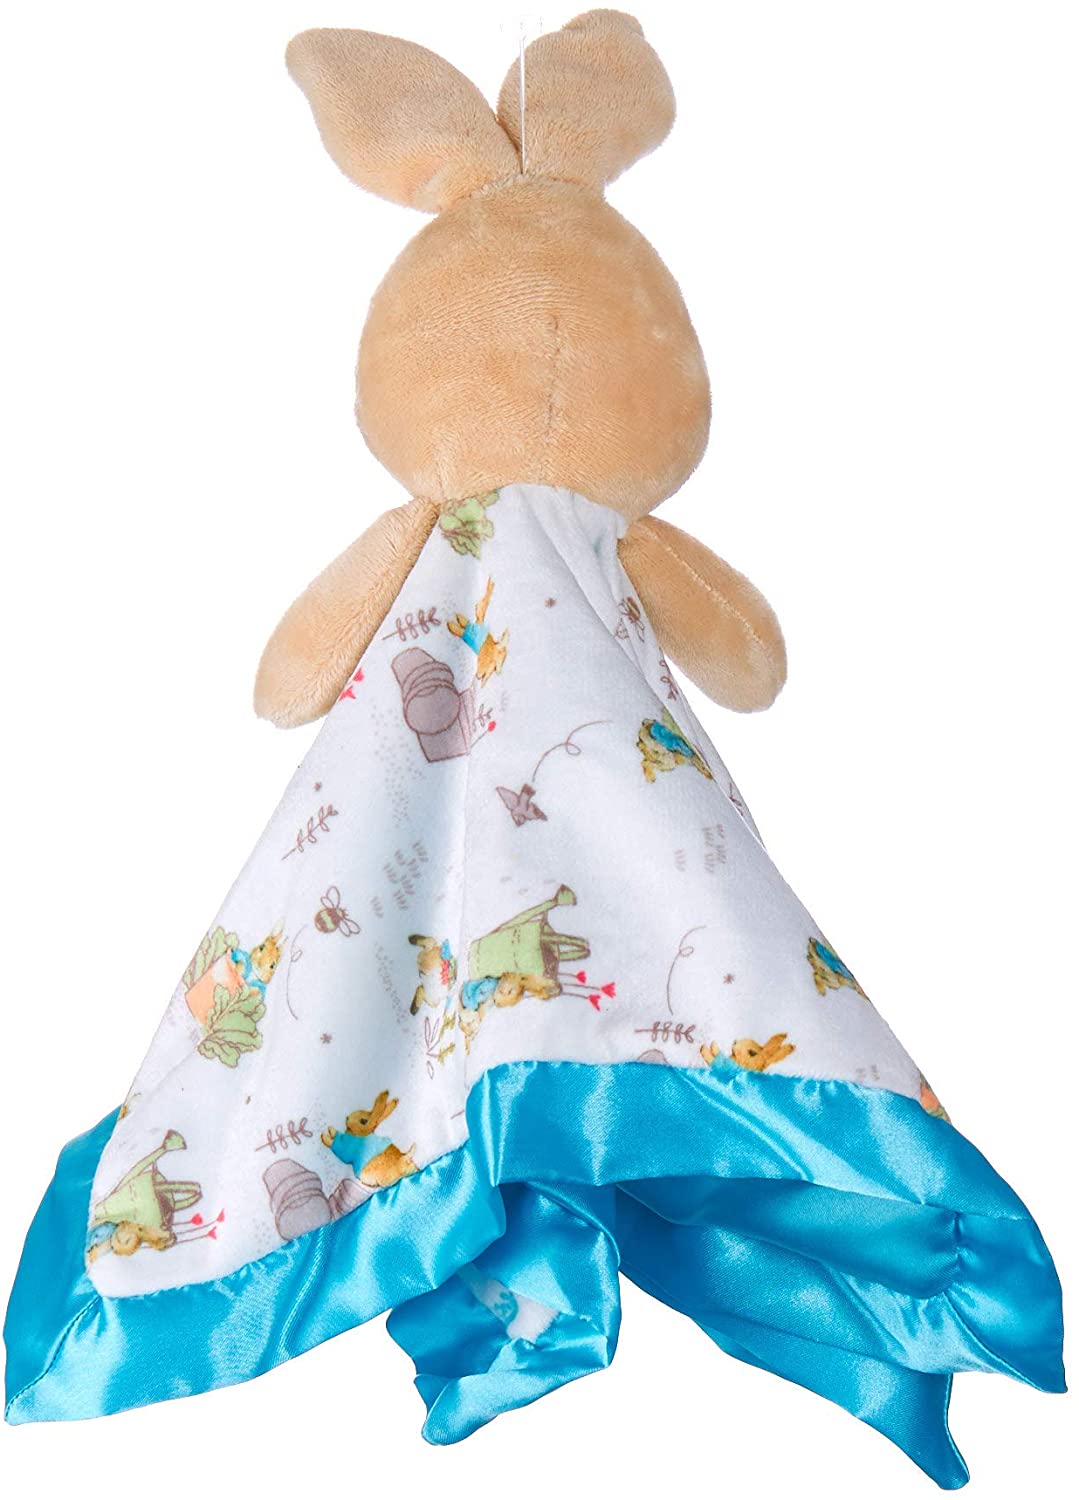 KIDS PREFERRED Beatrix Potter Peter Rabbit Plush Stuffed Animal Snuggler Blanket - Blue